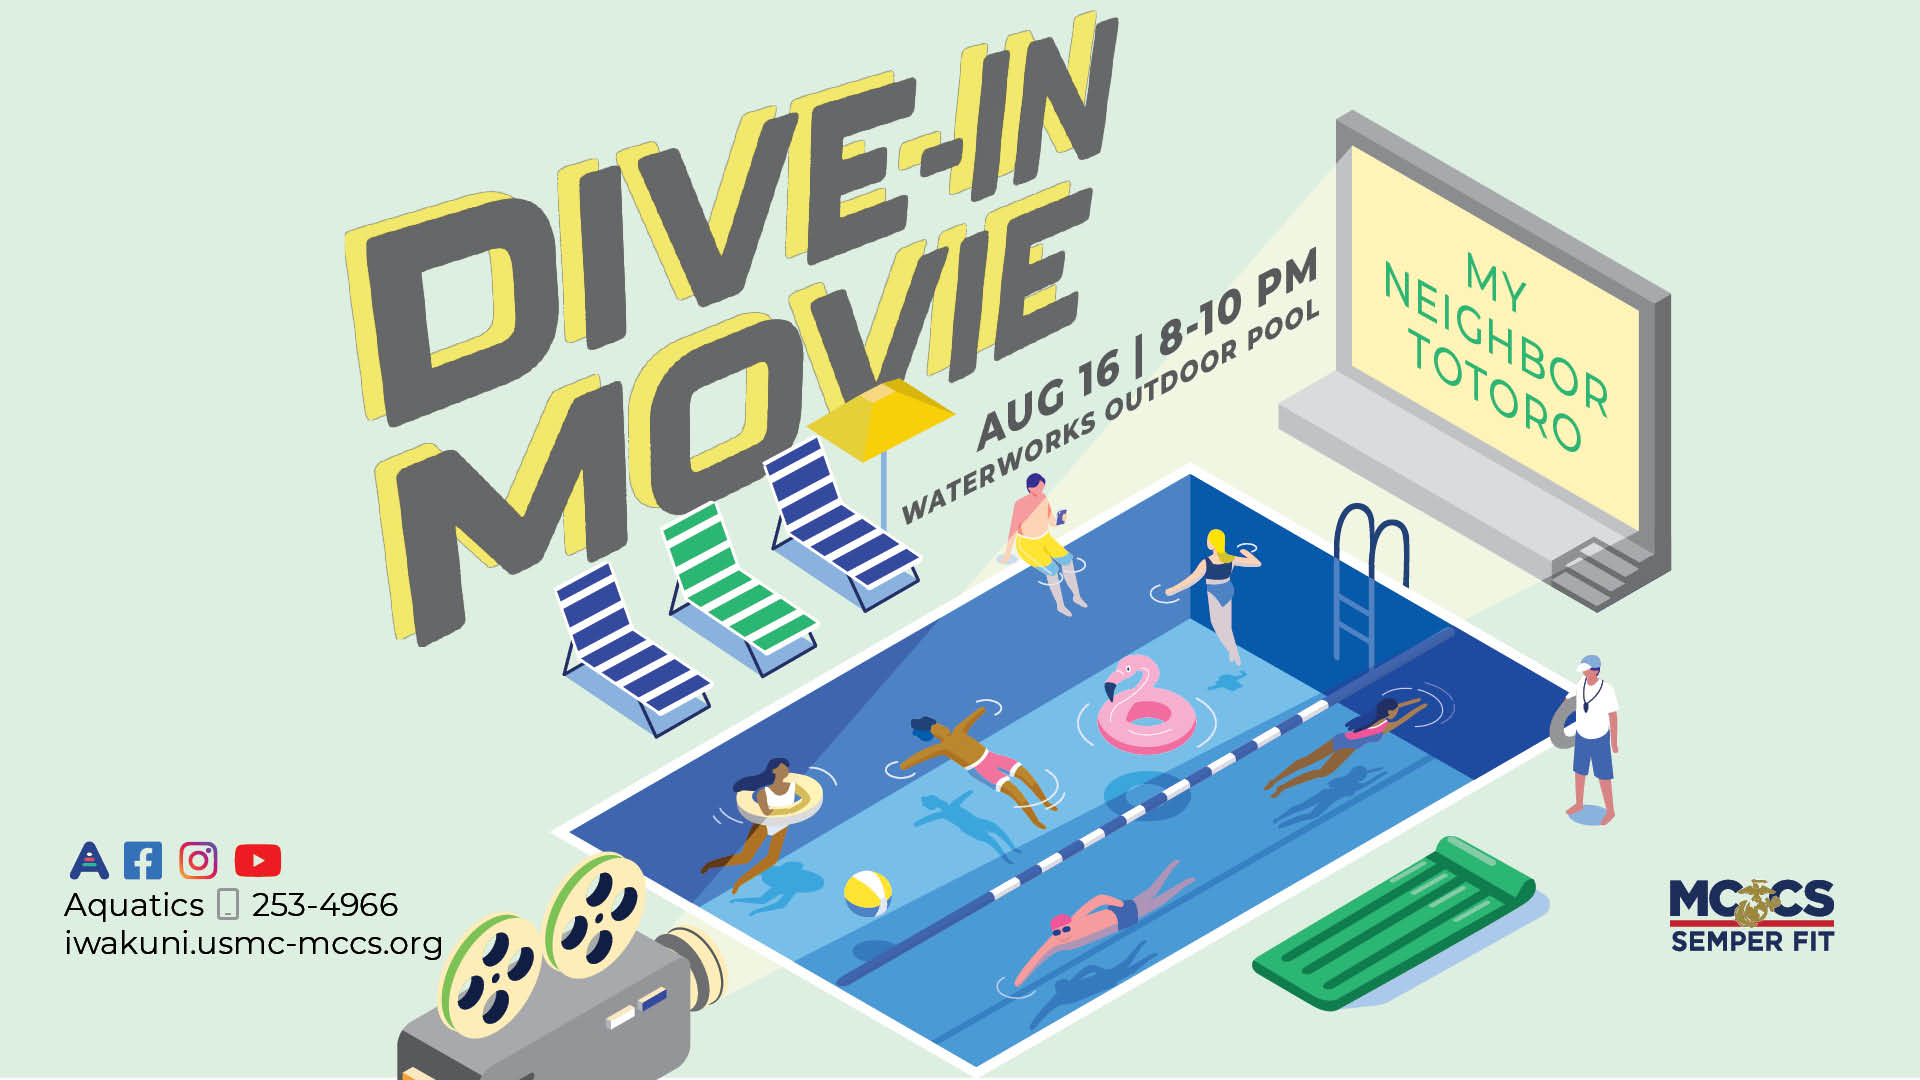 Summer Dive-In Movie - My Neighbor Totoro